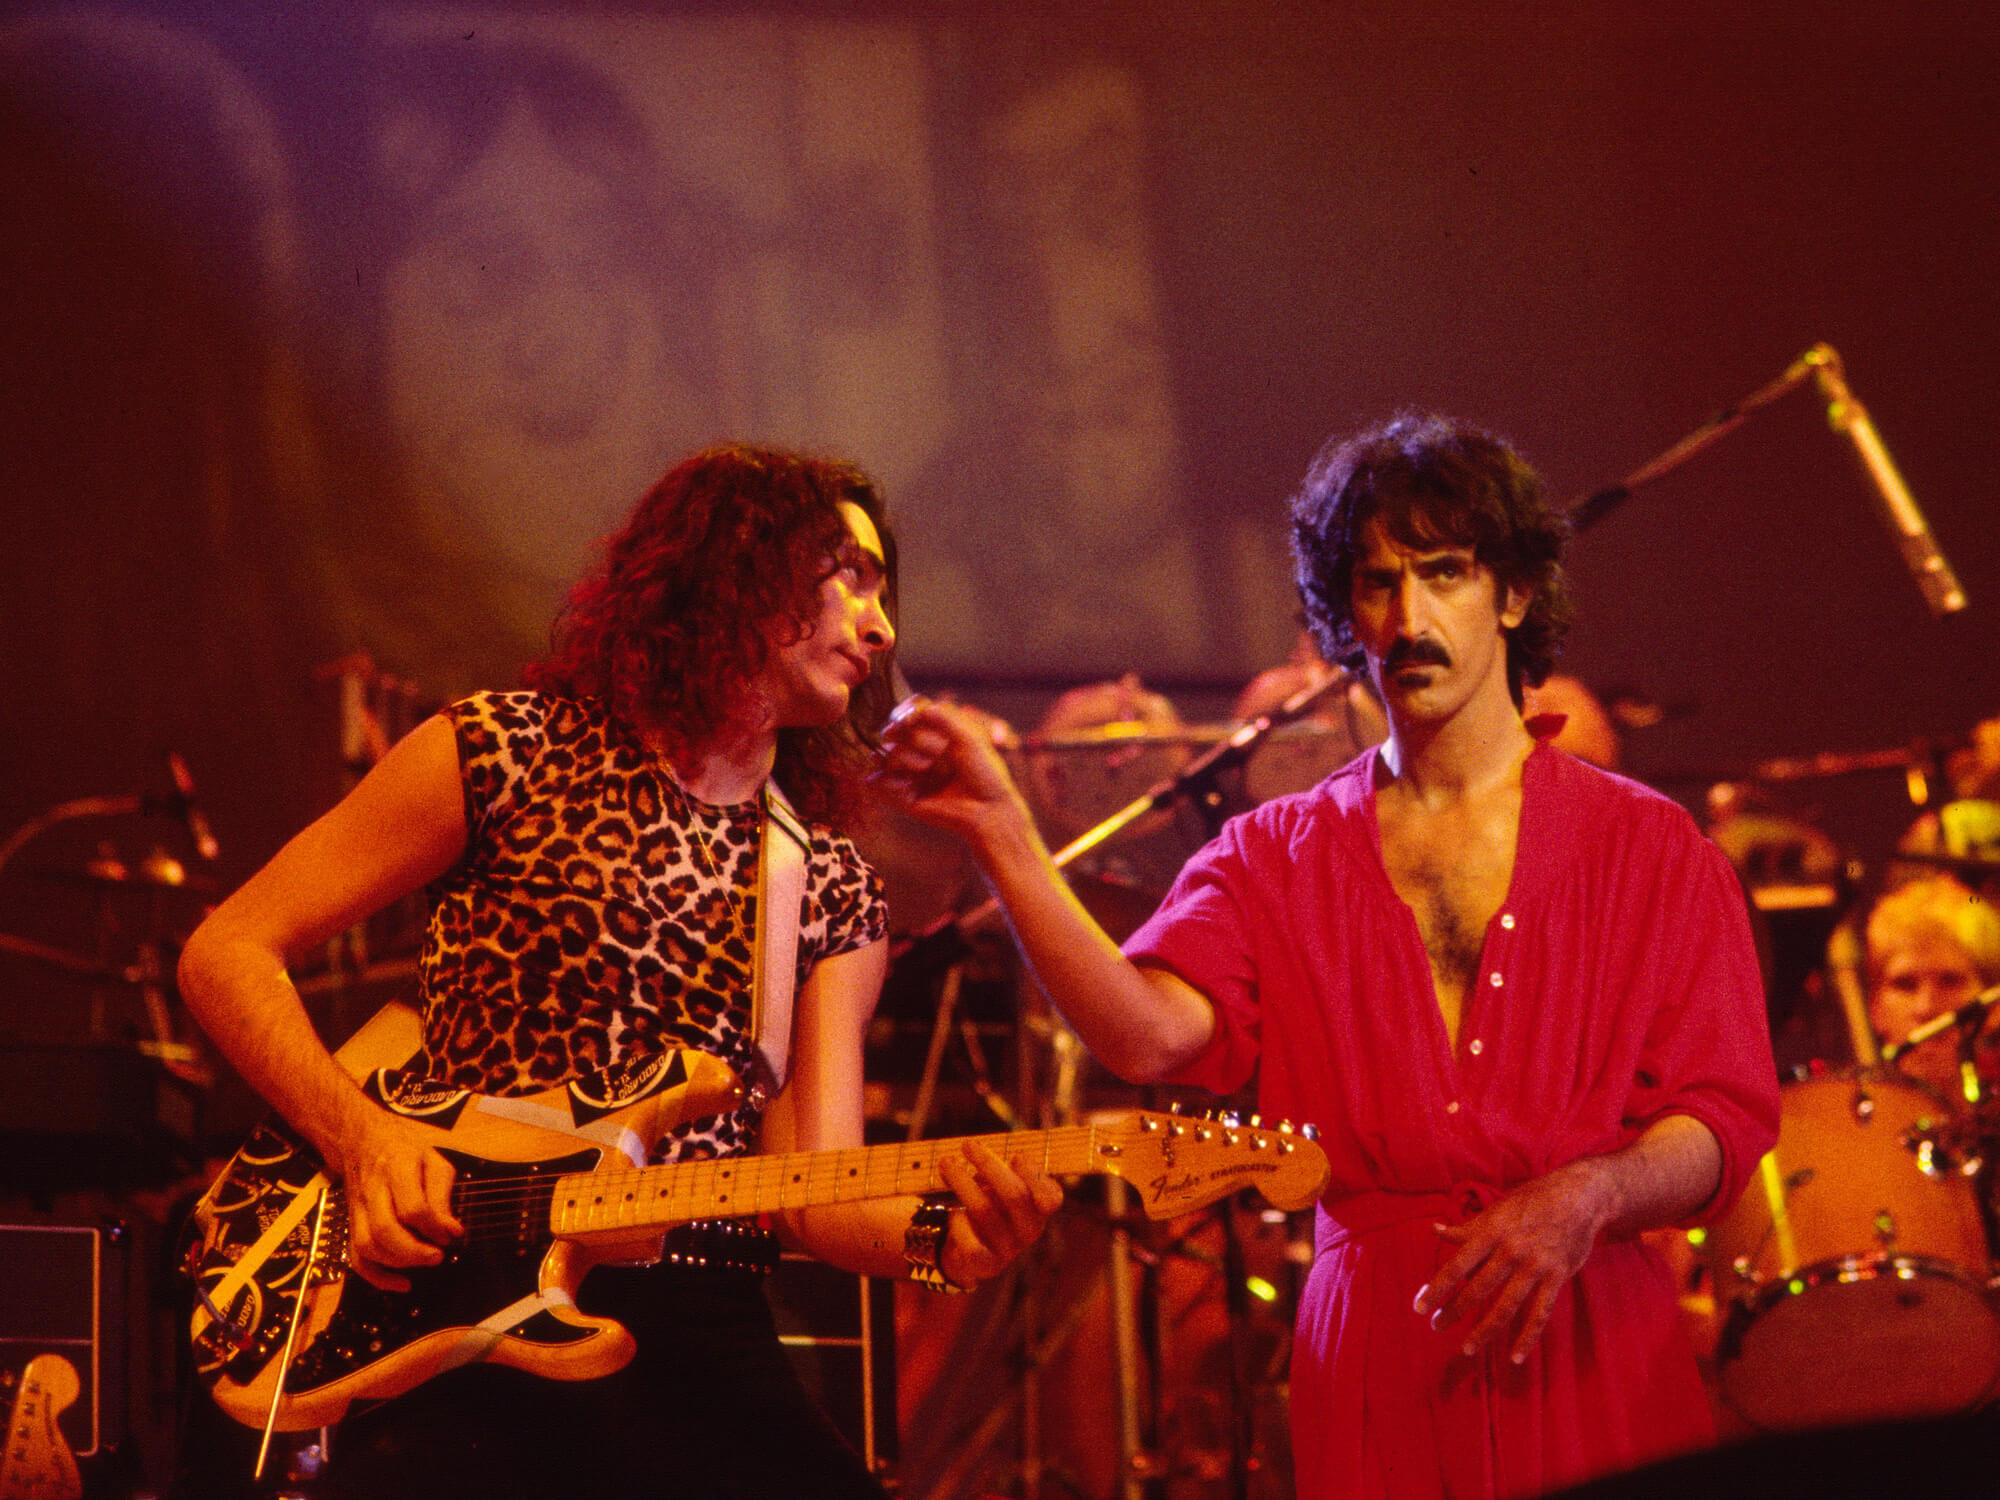 Steve Vai and Frank Zappa